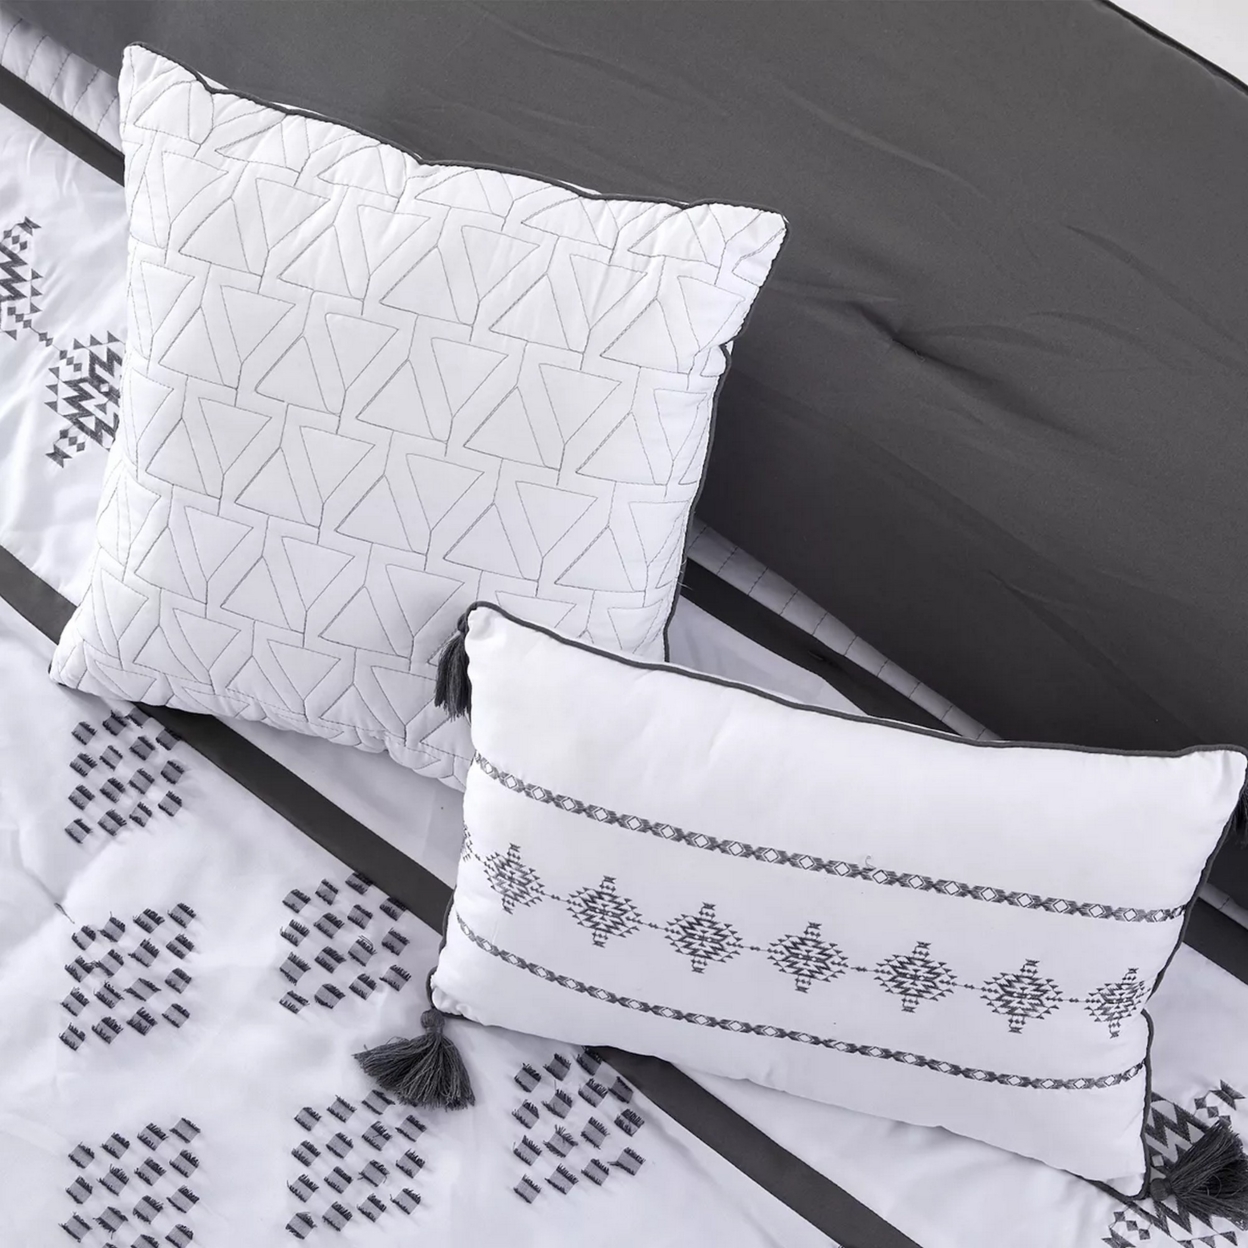 Ohio 5 Piece King Comforter Set With Geometric Prints, White And Gray By The Urban Port- Saltoro Sherpi